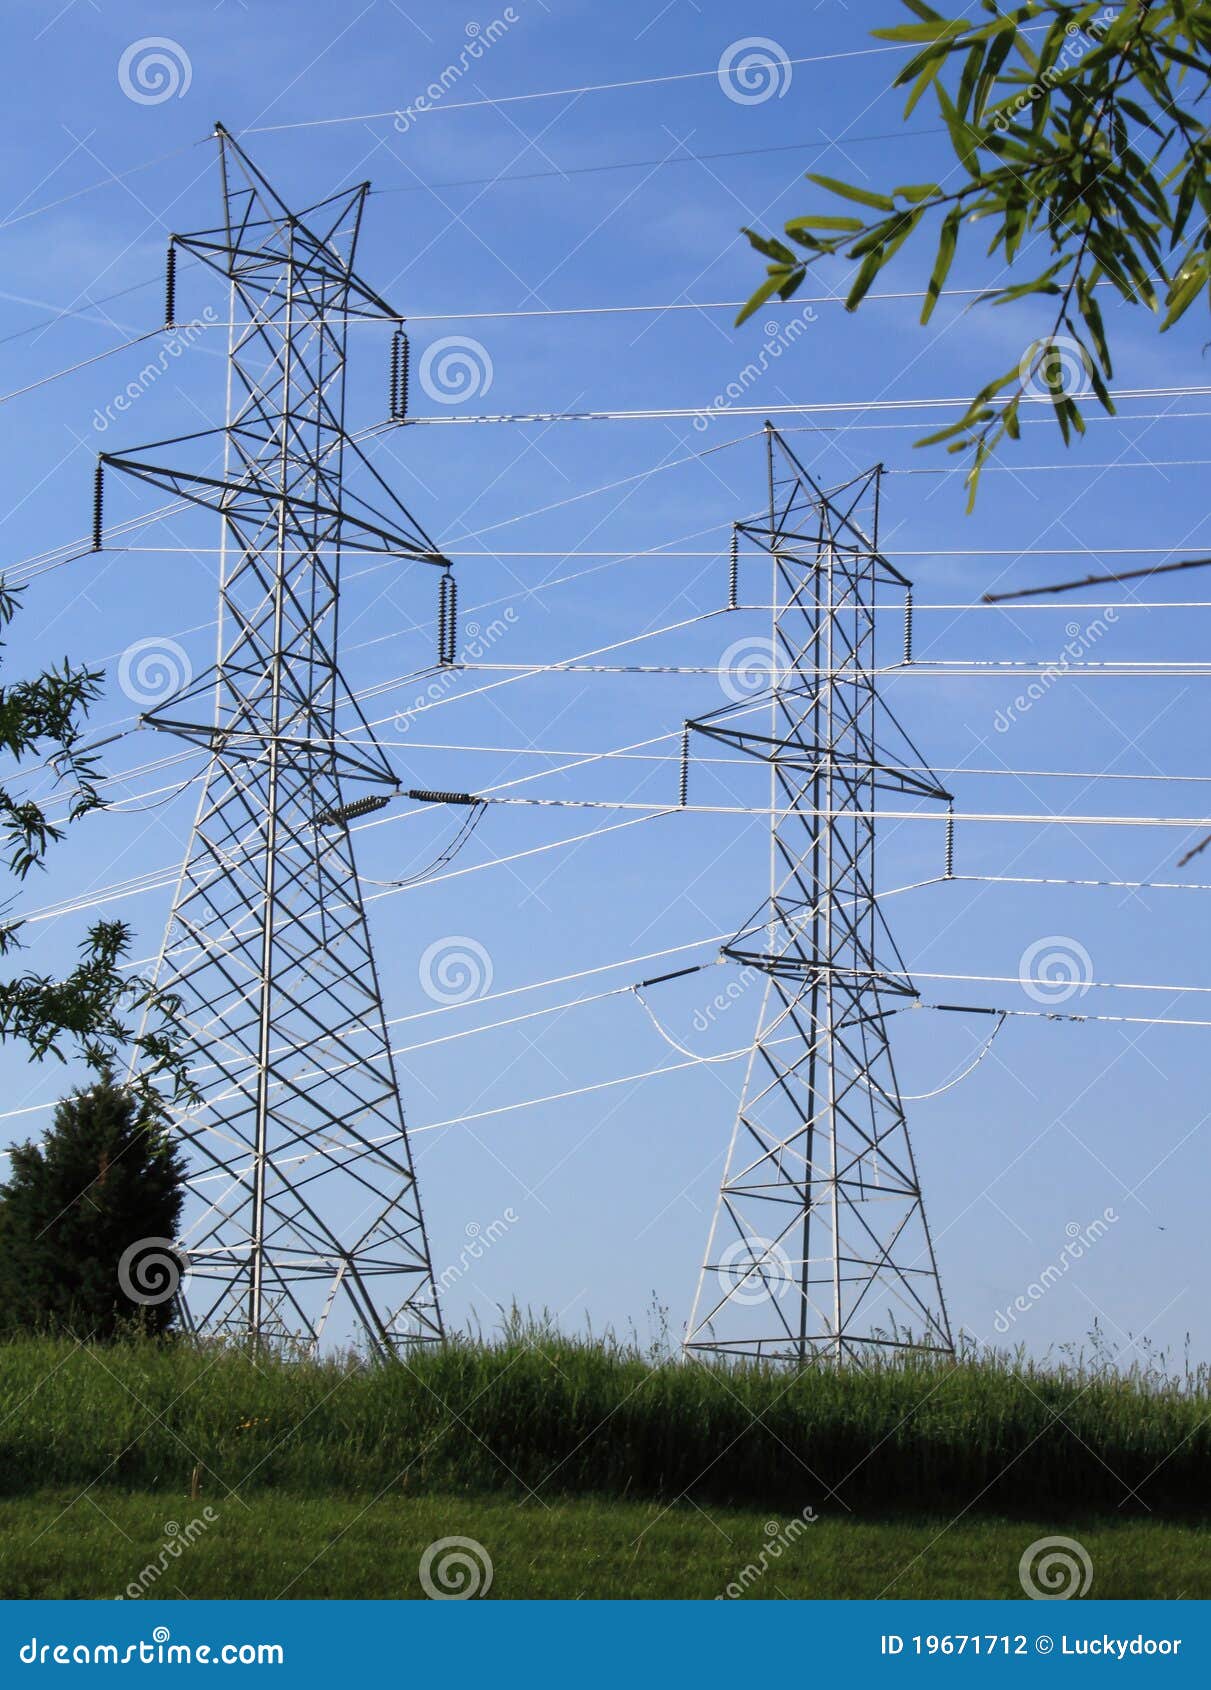 power line pylons